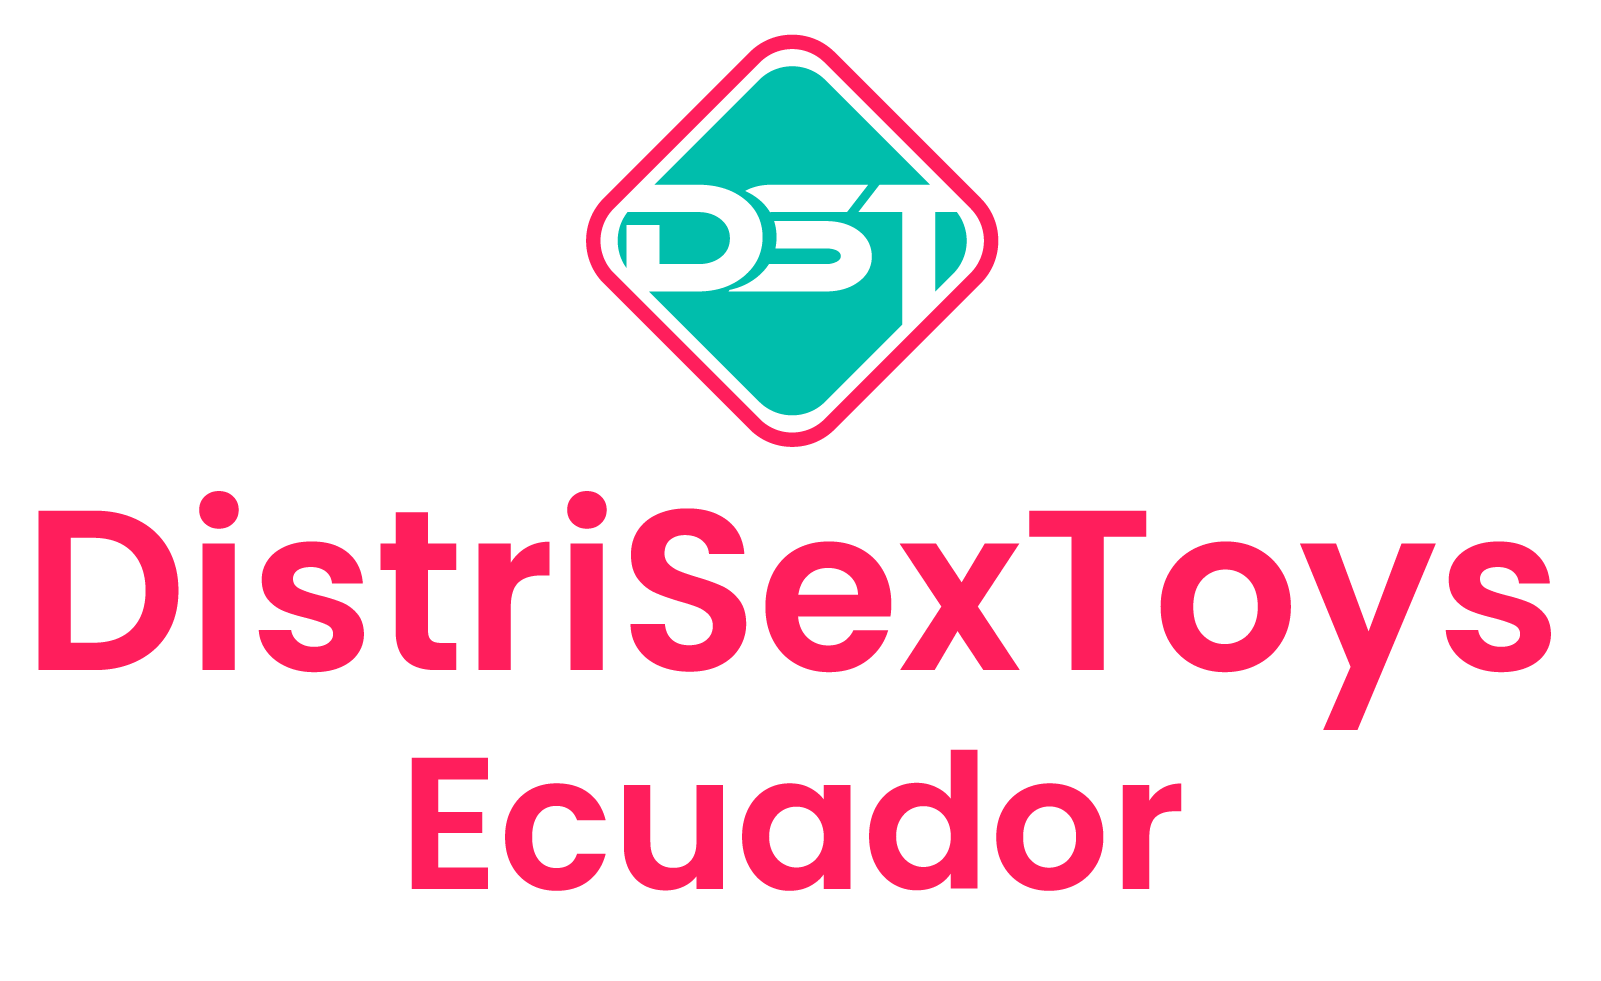 Ecuador Distribution Sex Toys Mayorista